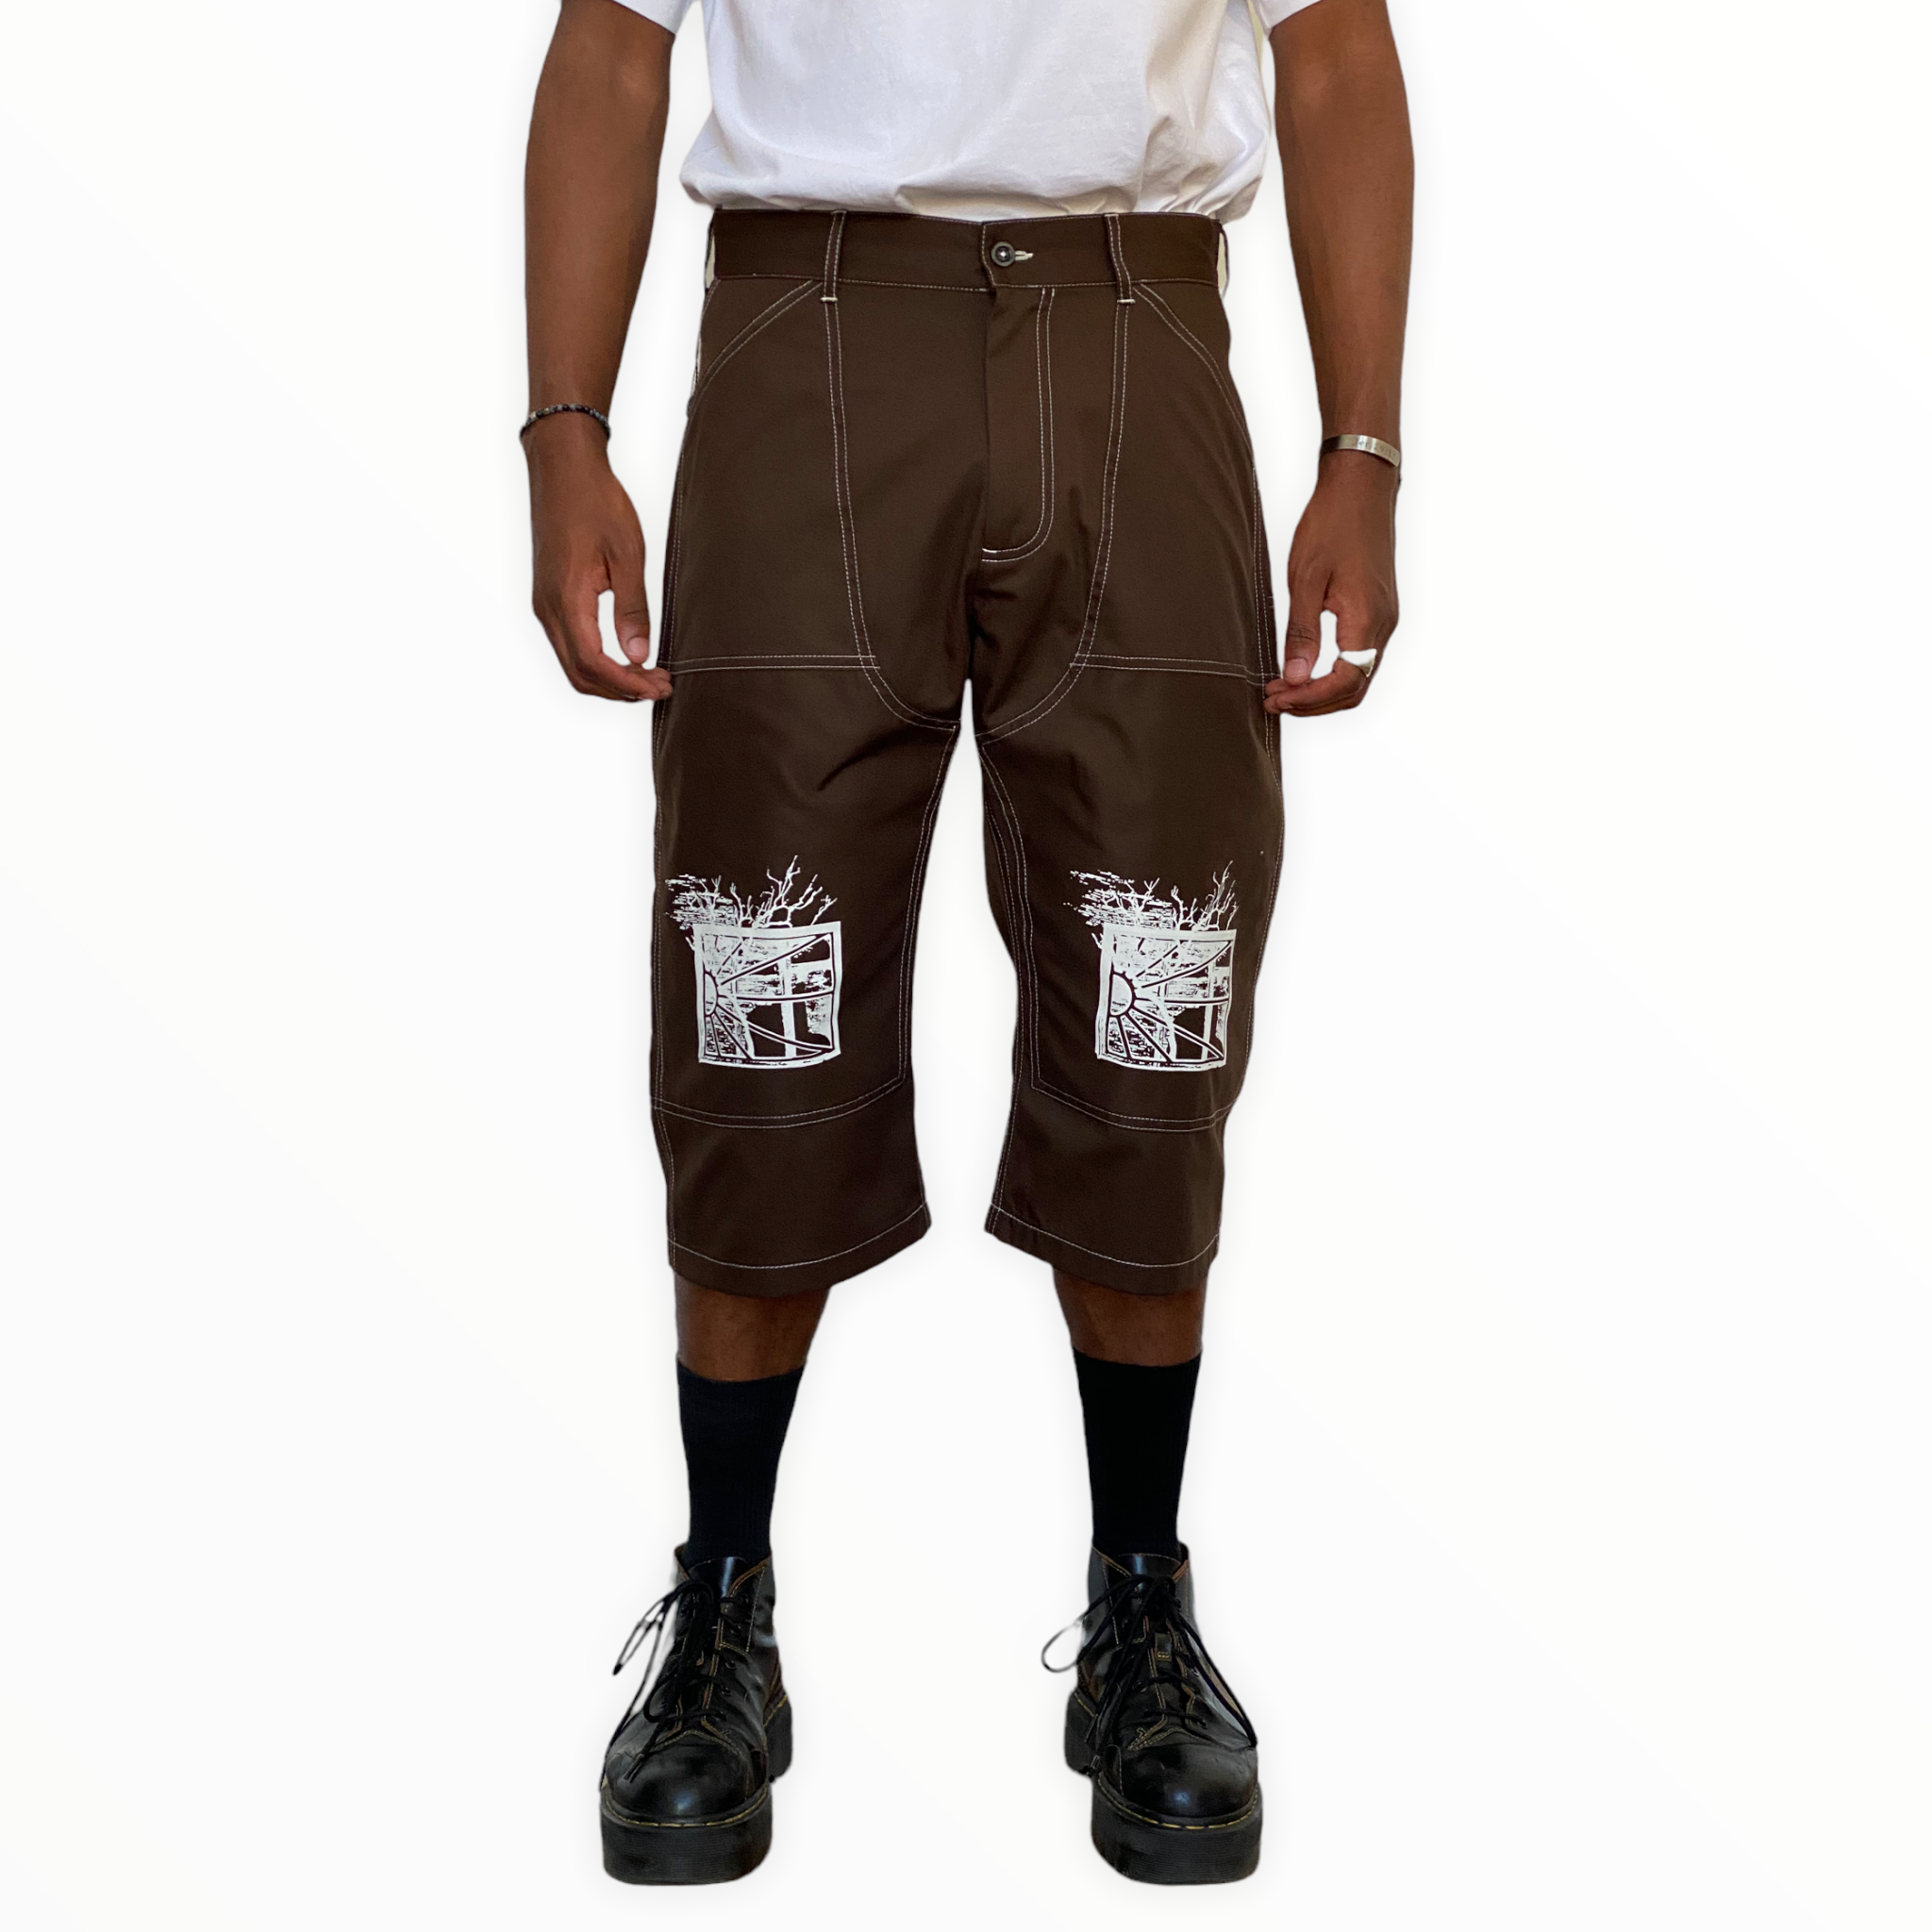 Work Printed Shorts Woven Brown - Rassvet (PACCBET)